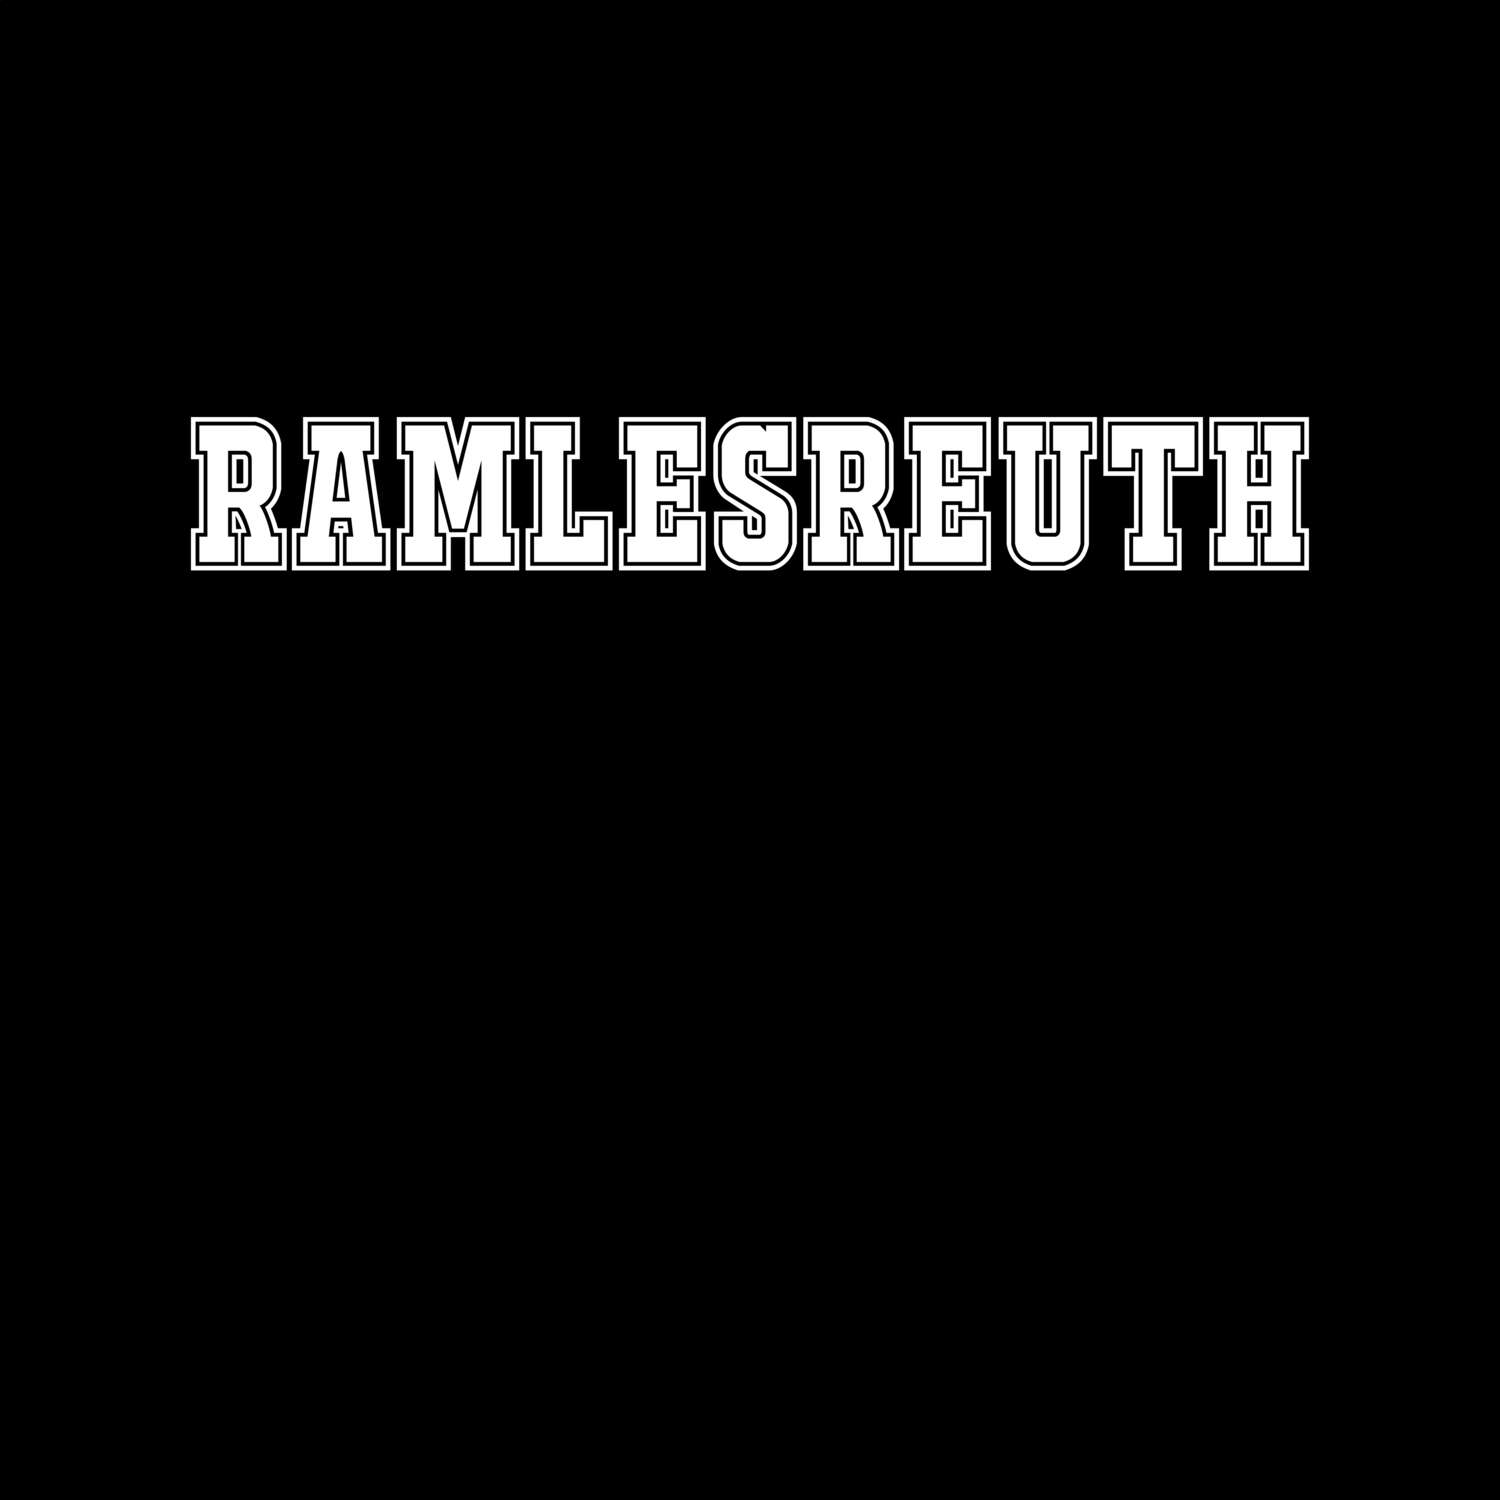 Ramlesreuth T-Shirt »Classic«